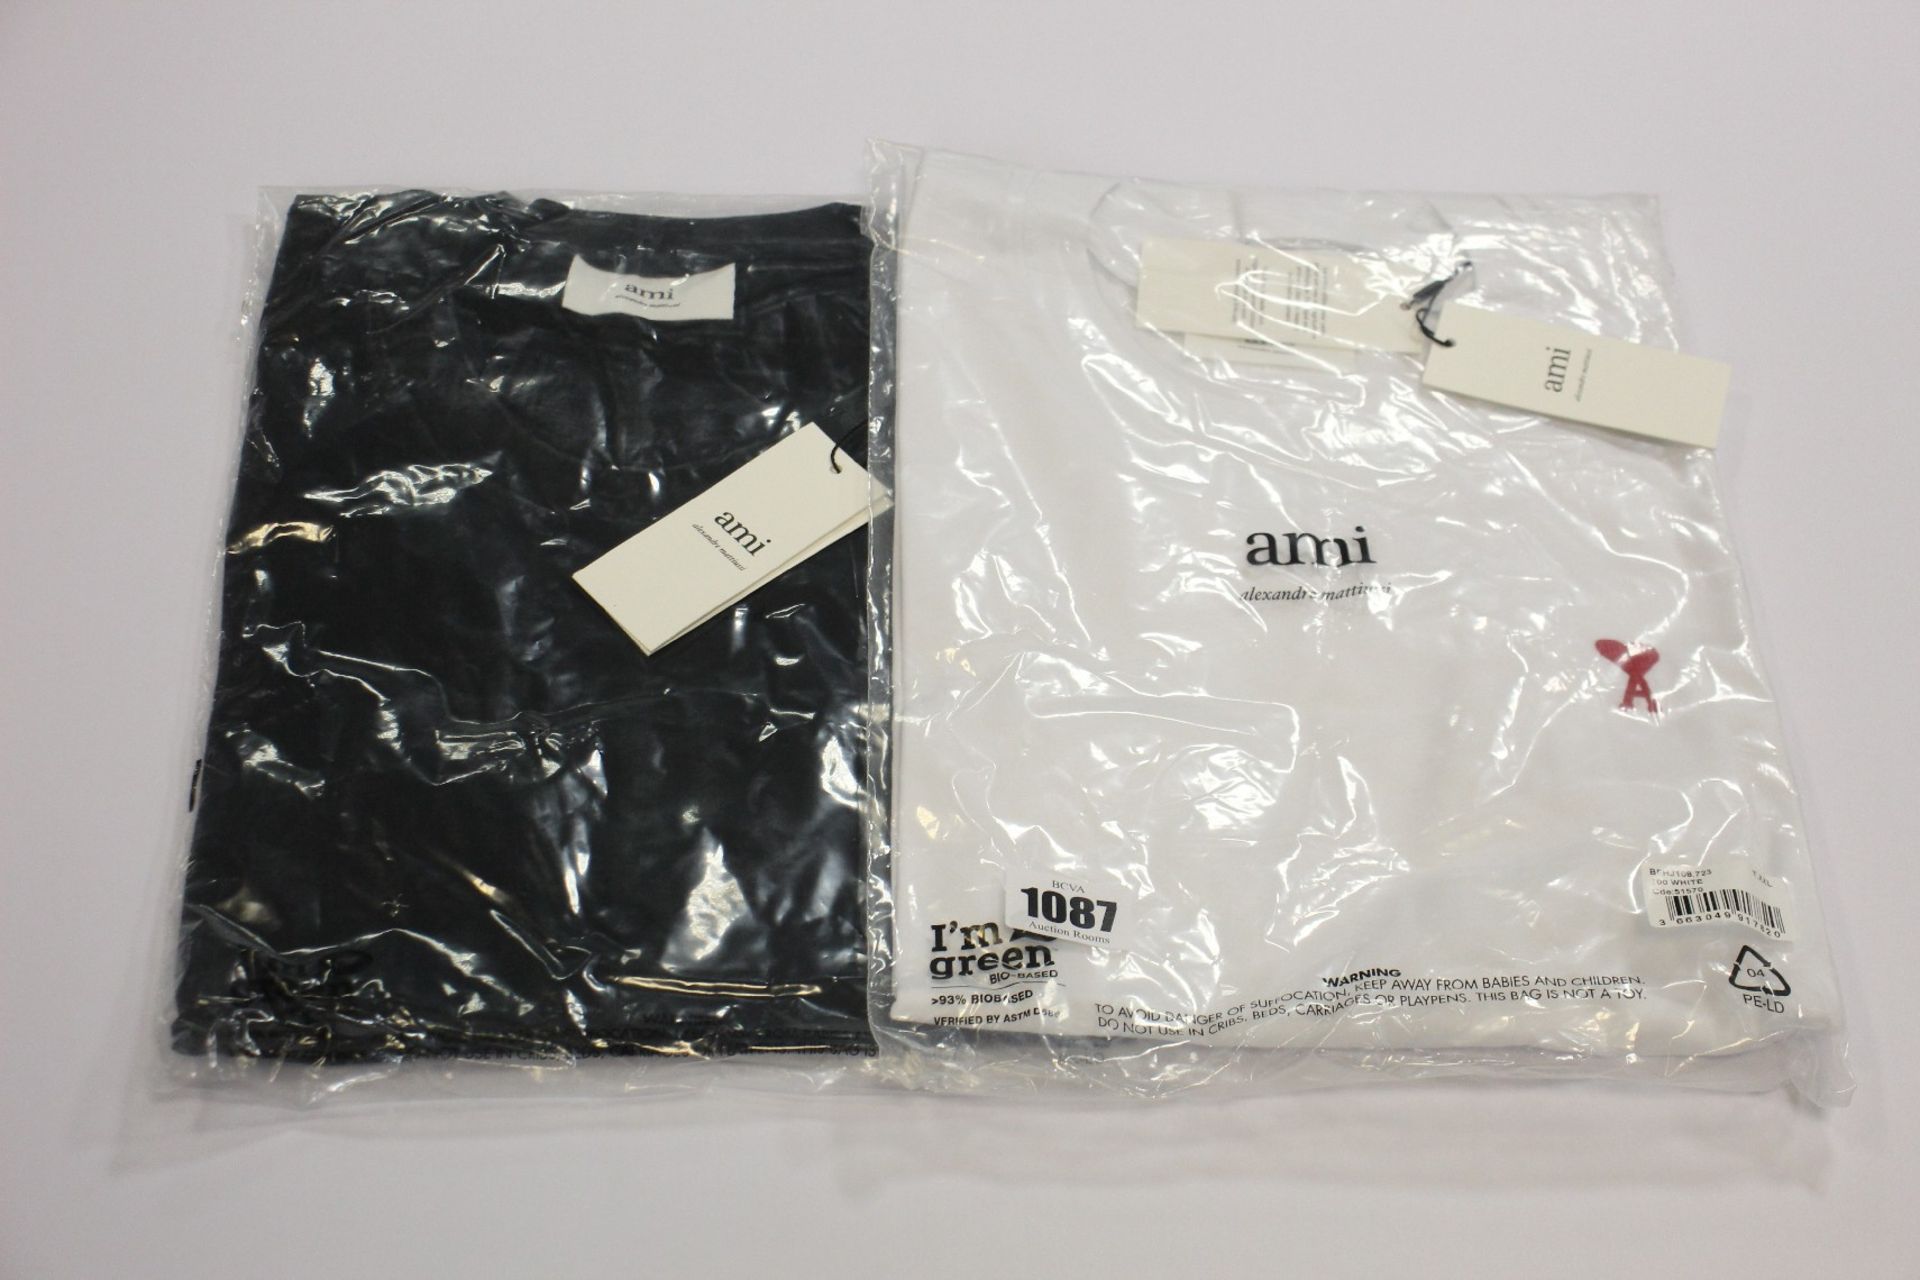 Two as new Alexandre Mattiussi Ami T- shirts (XXL - RRP £80 each).